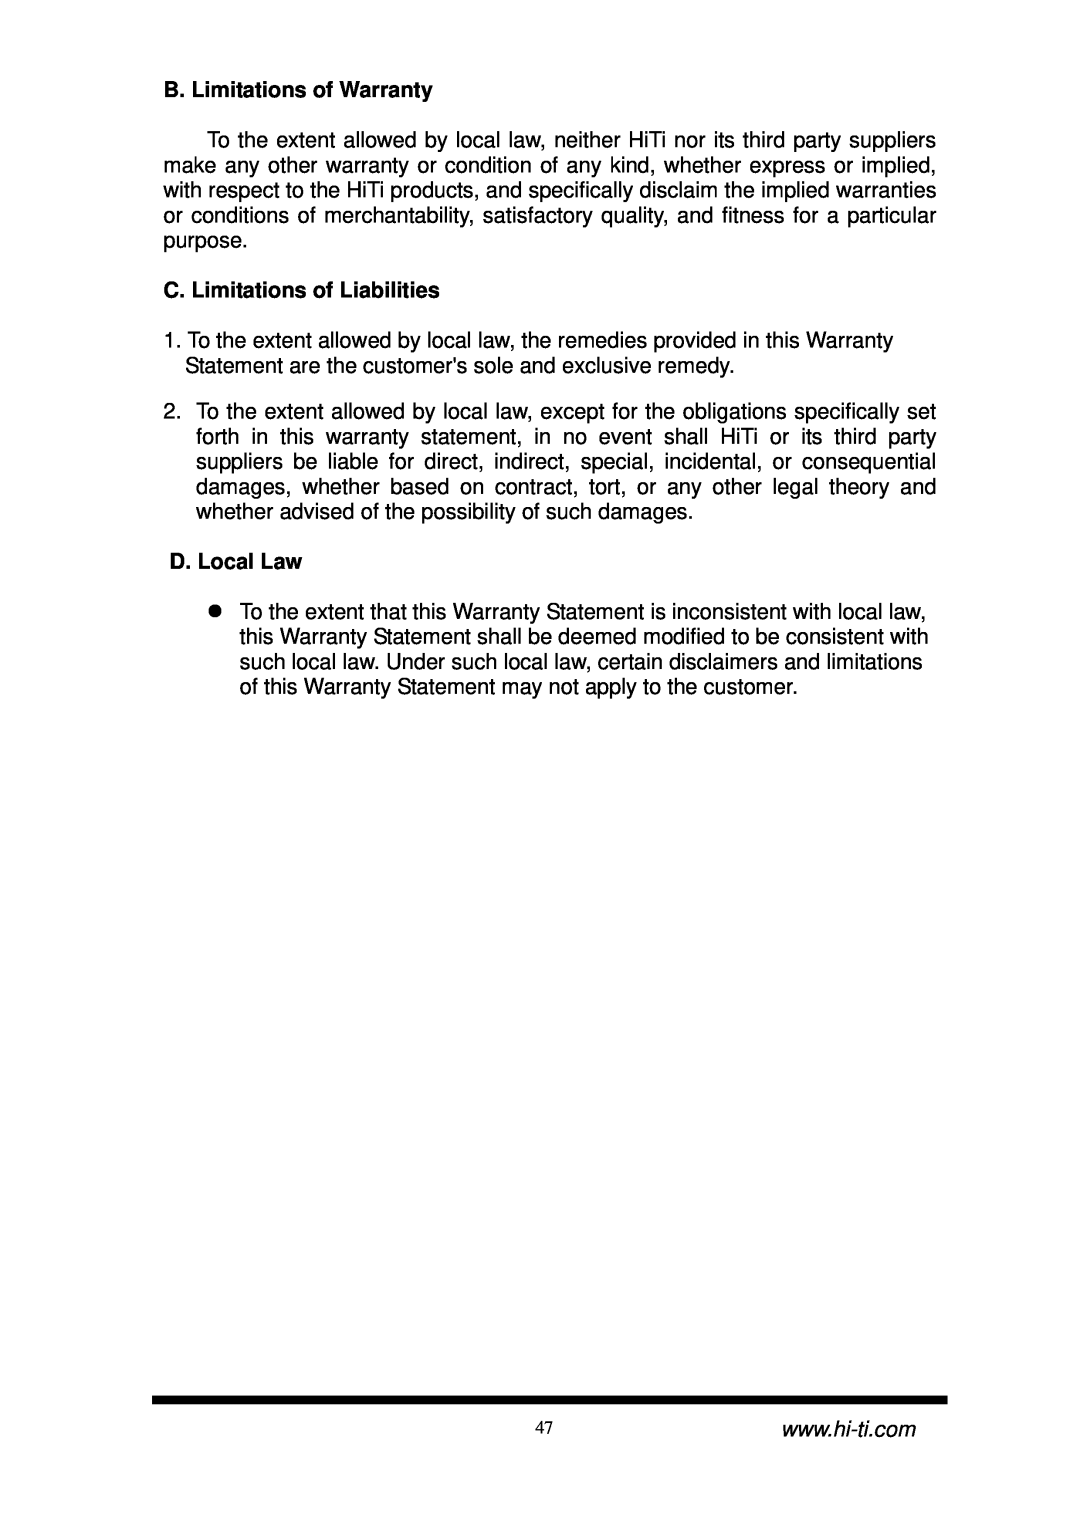 Hi-Touch Imaging Technologies CS-300 user manual B. Limitations of Warranty, C. Limitations of Liabilities, D. Local Law 